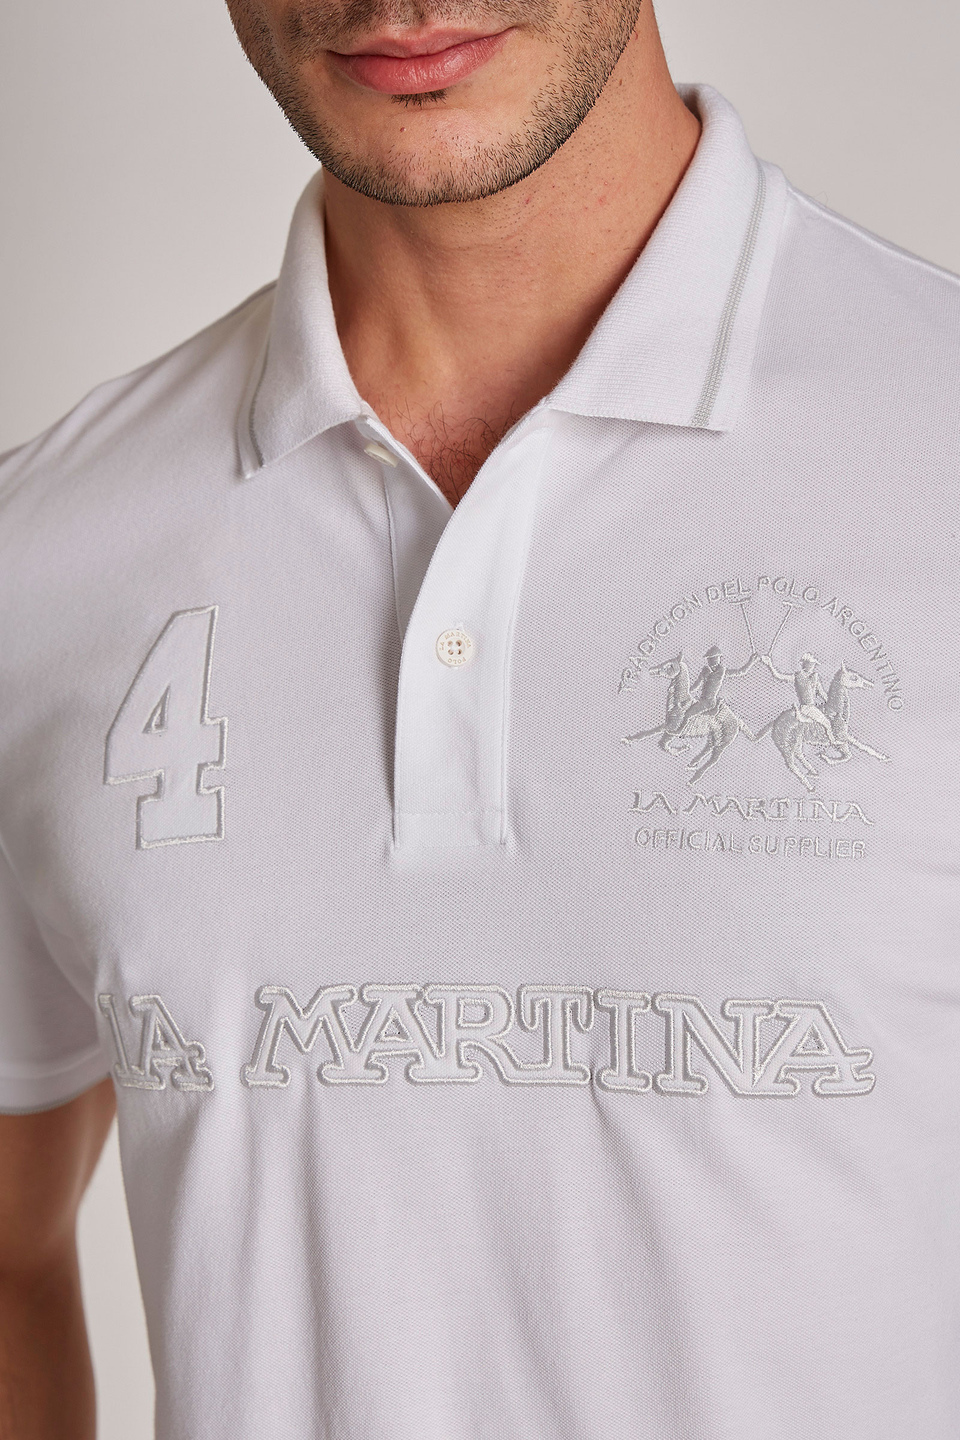 Polo de hombre de manga corta de algodón elástico, corte regular - La Martina - Official Online Shop